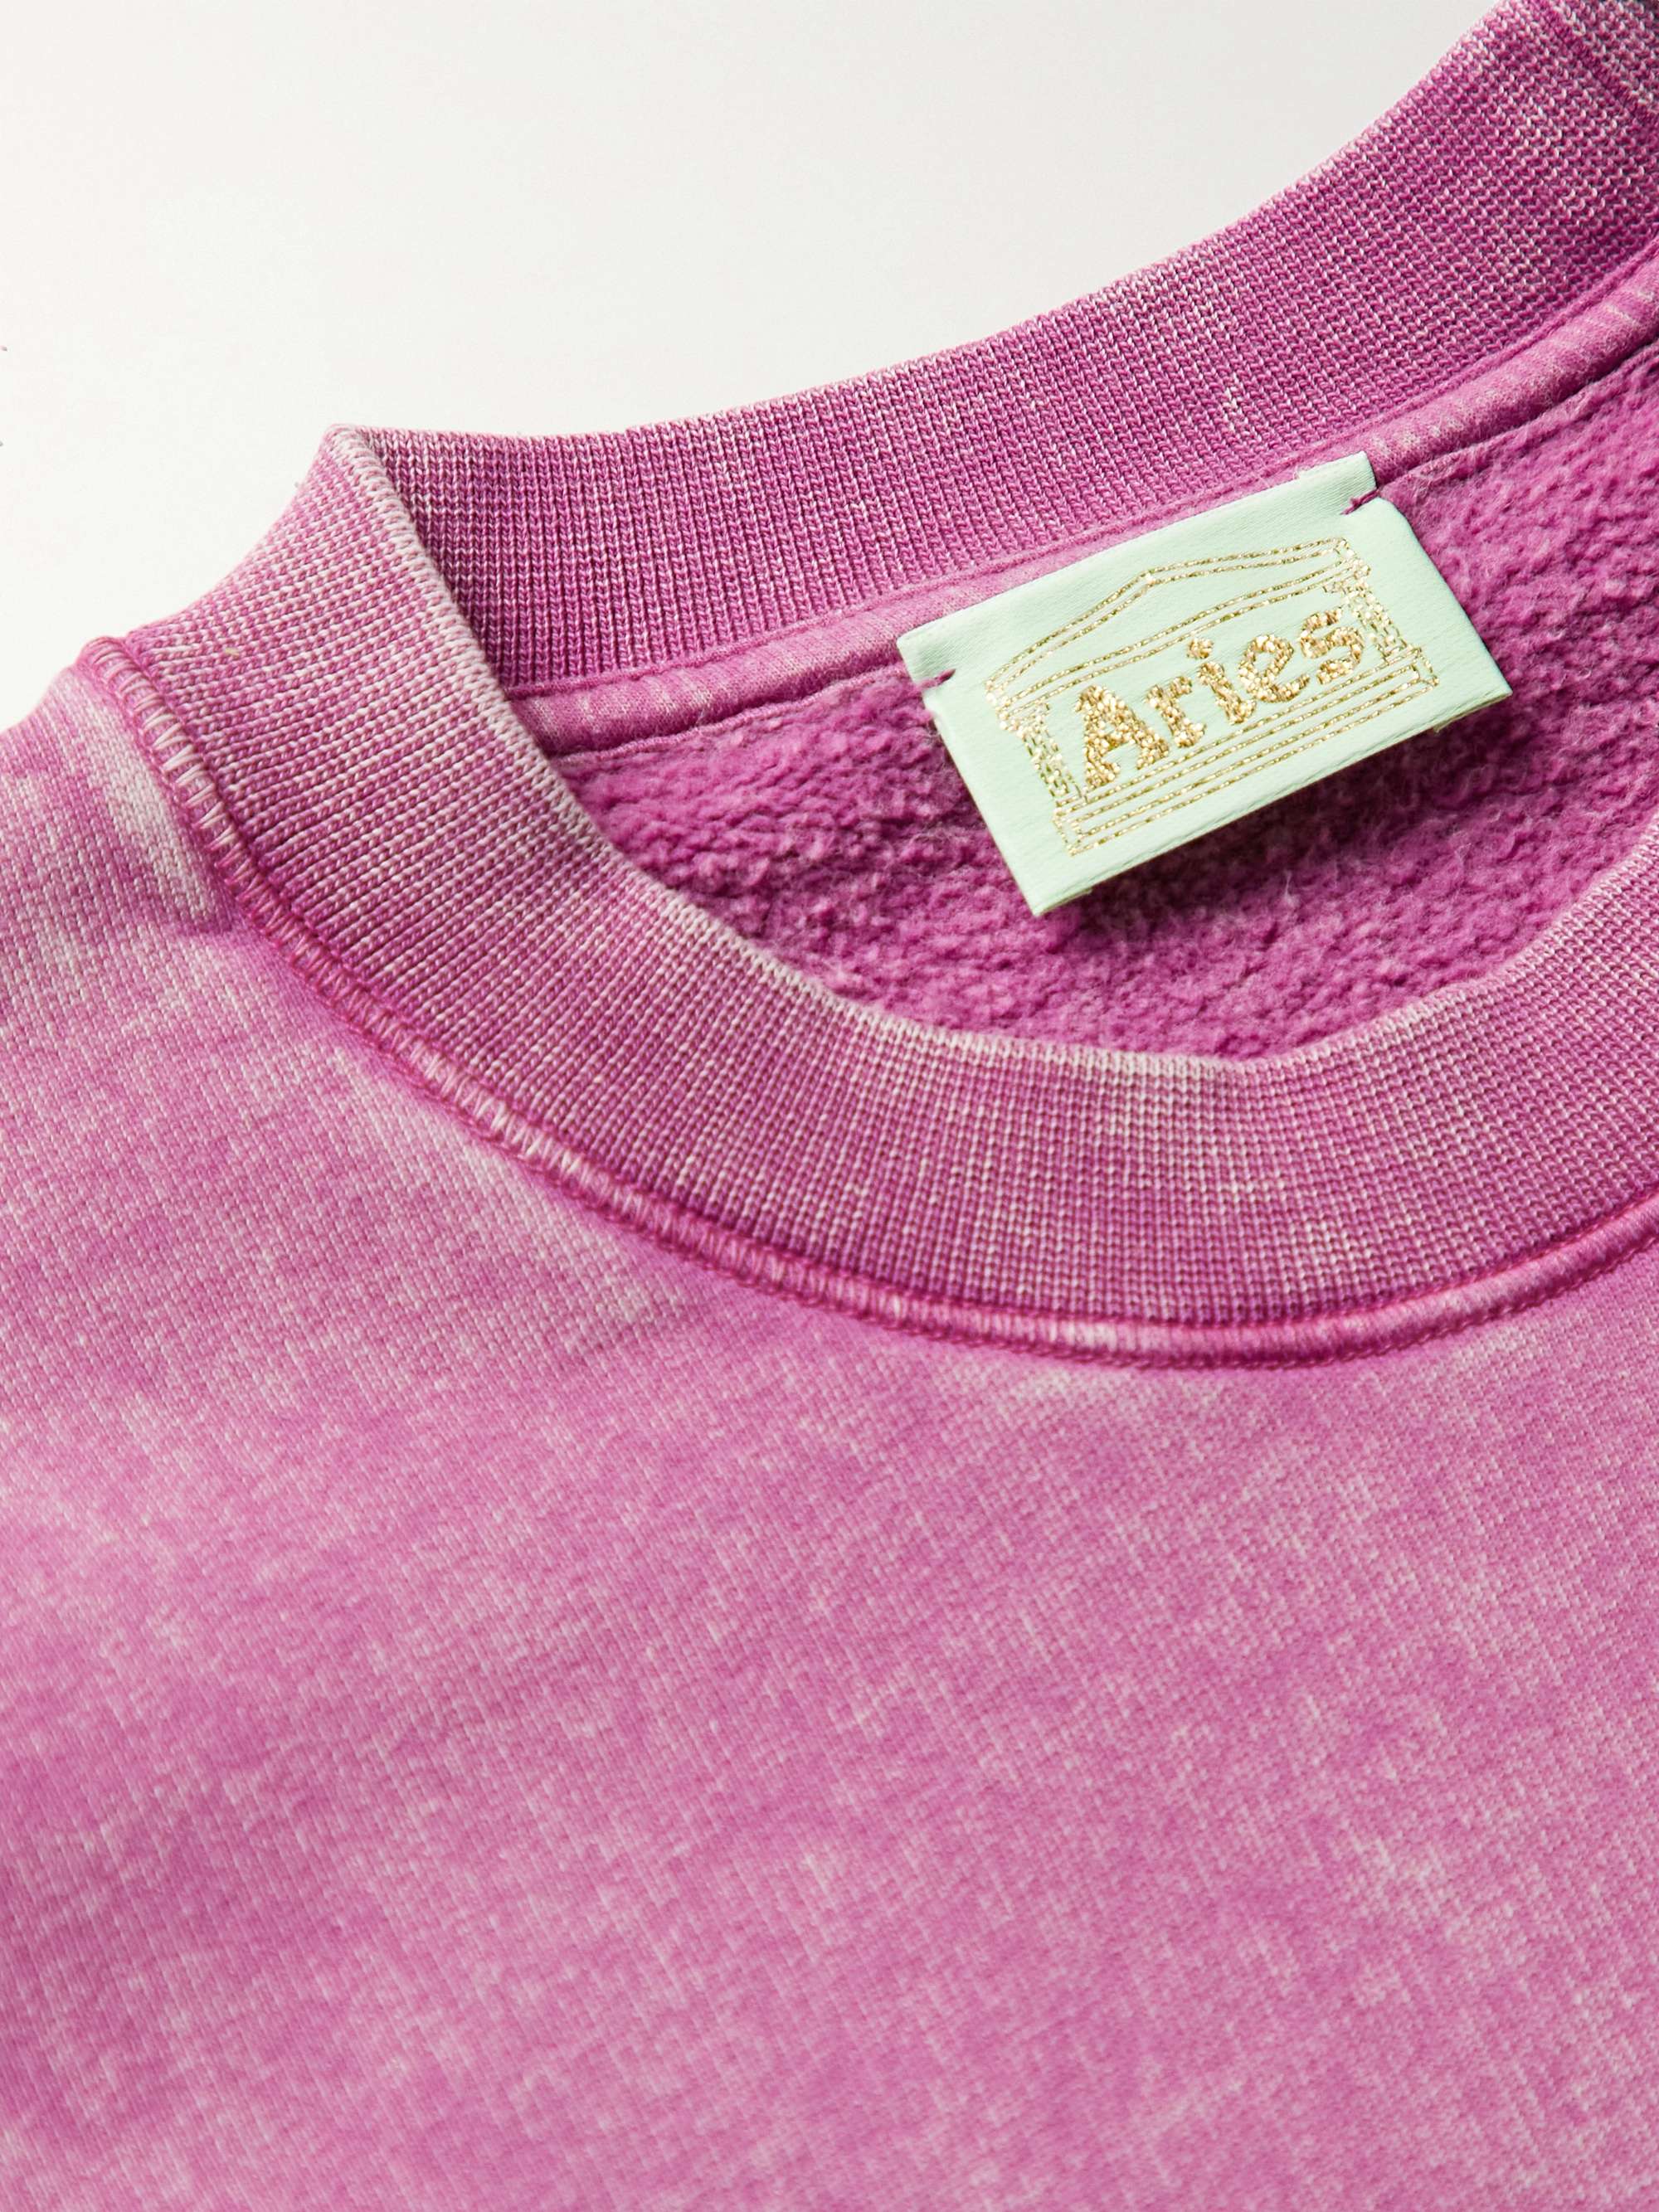 ARIES No Problemo Acid-Washed Cotton-Jersey Sweatshirt